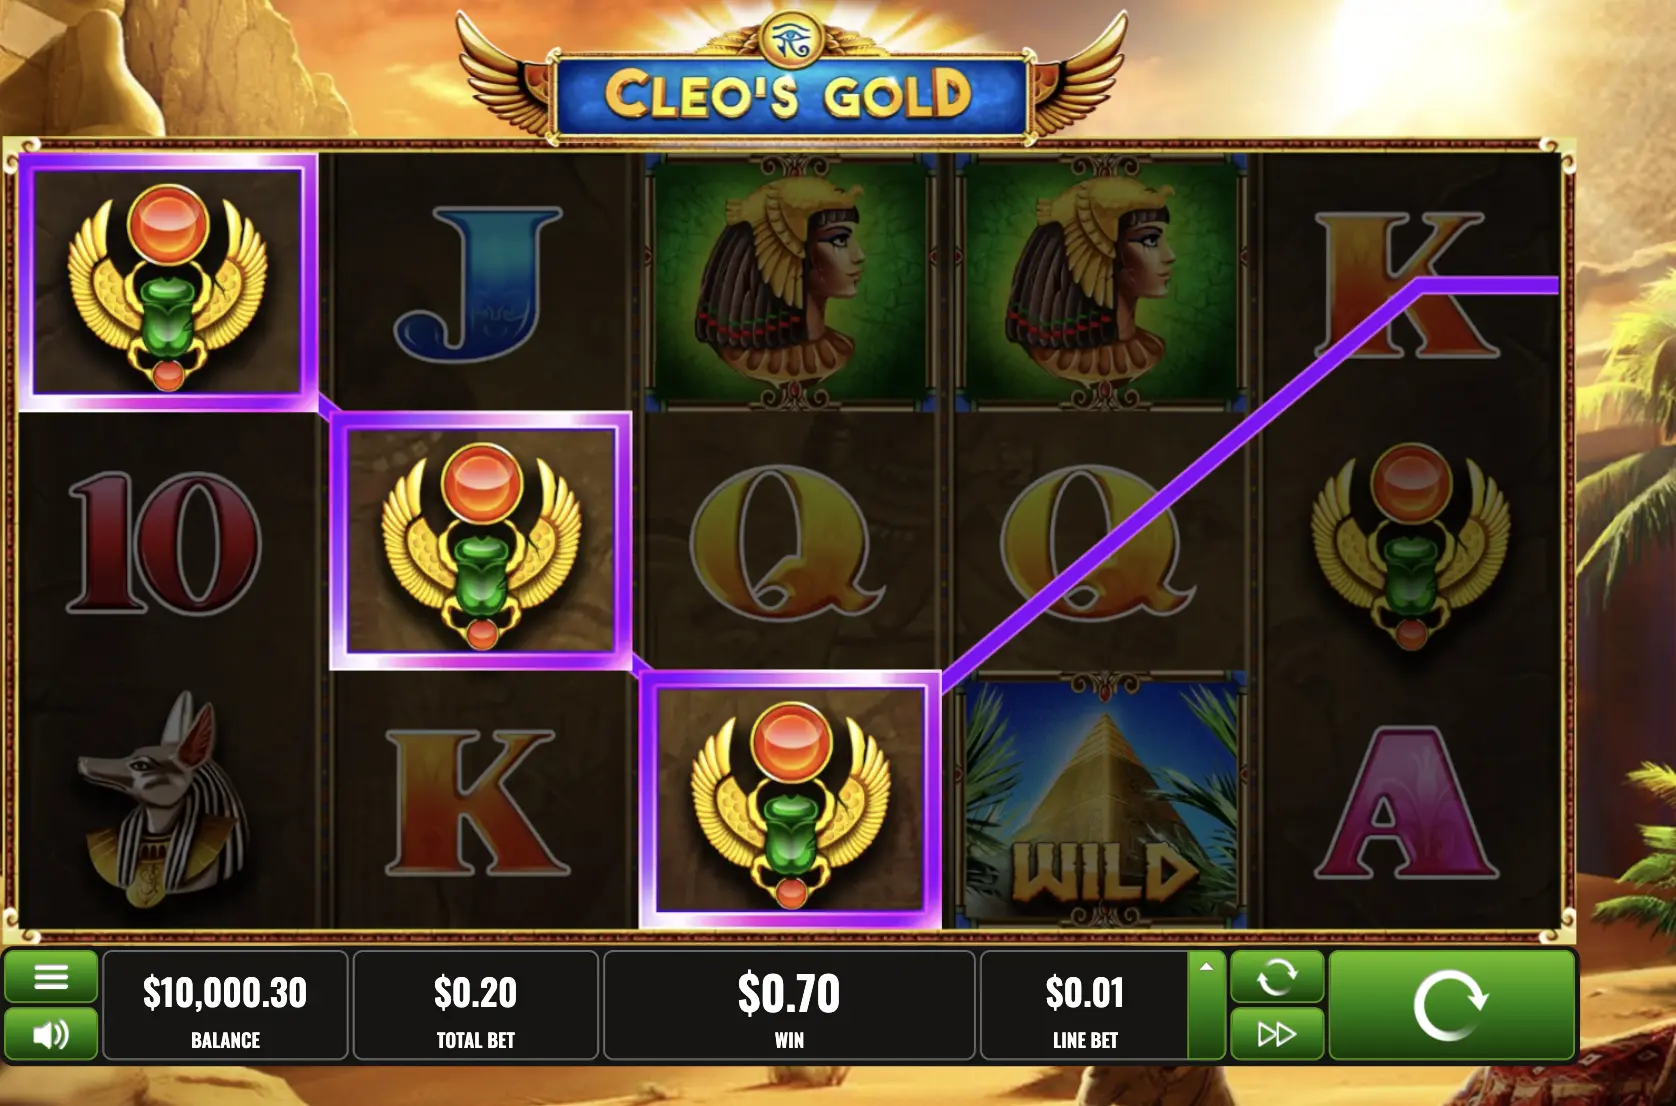 Cleo's Gold slot